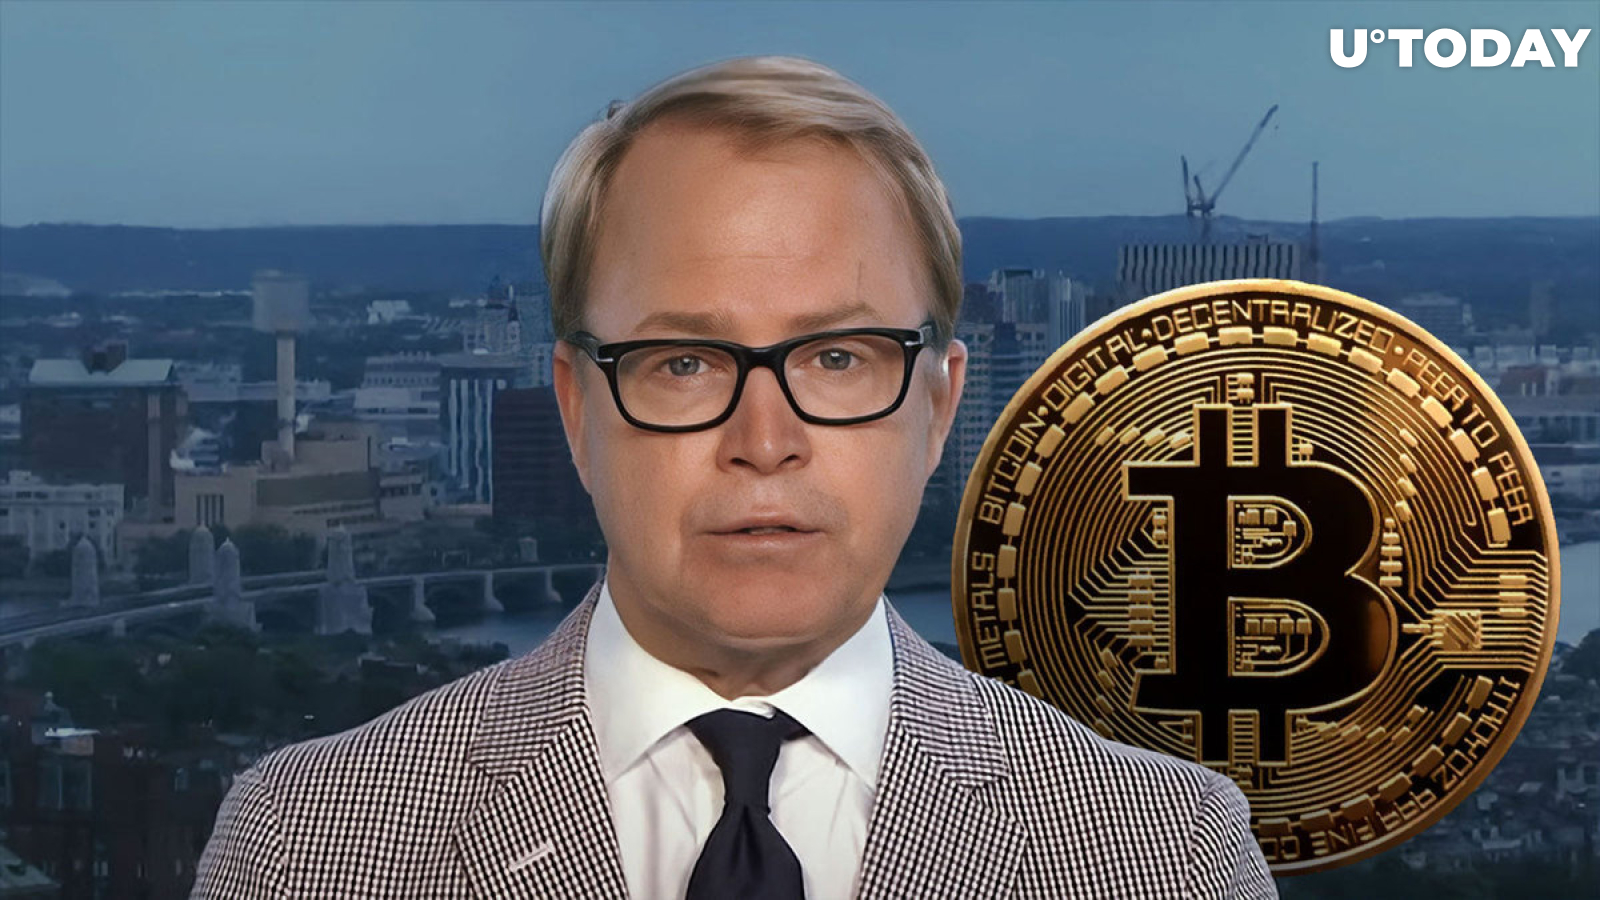 Fidelity's Jurrien Timmer Makes Important Bitcoin (BTC) Statement